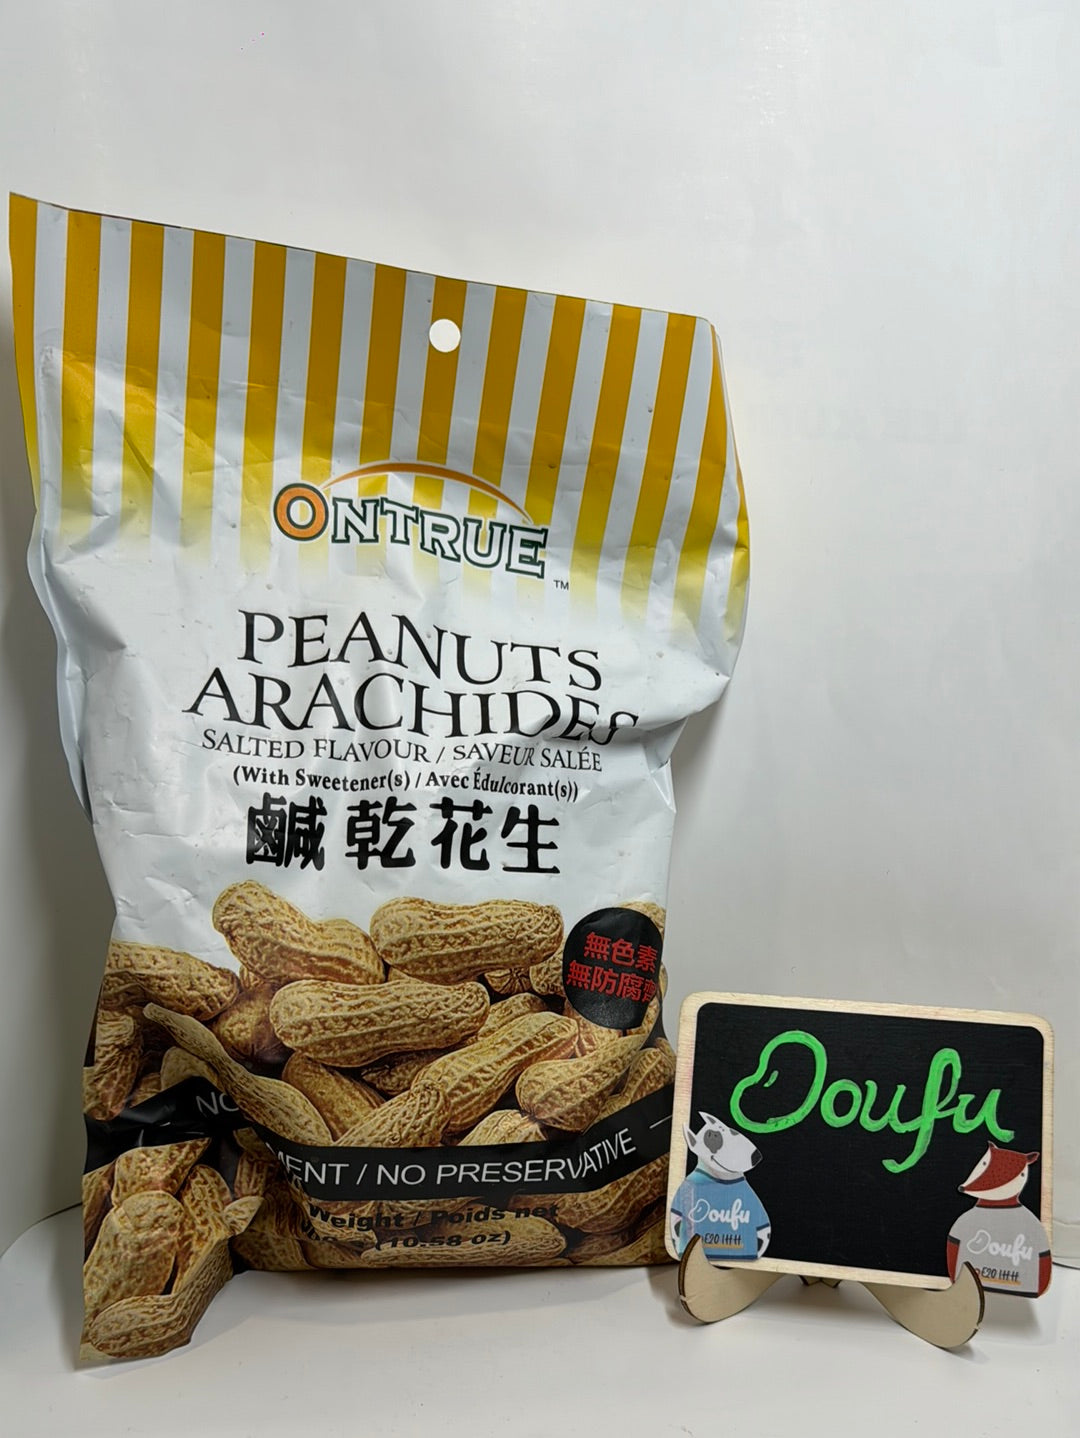 Ontrue Peanuts arachides salted flavour xiangan咸干花生 300g